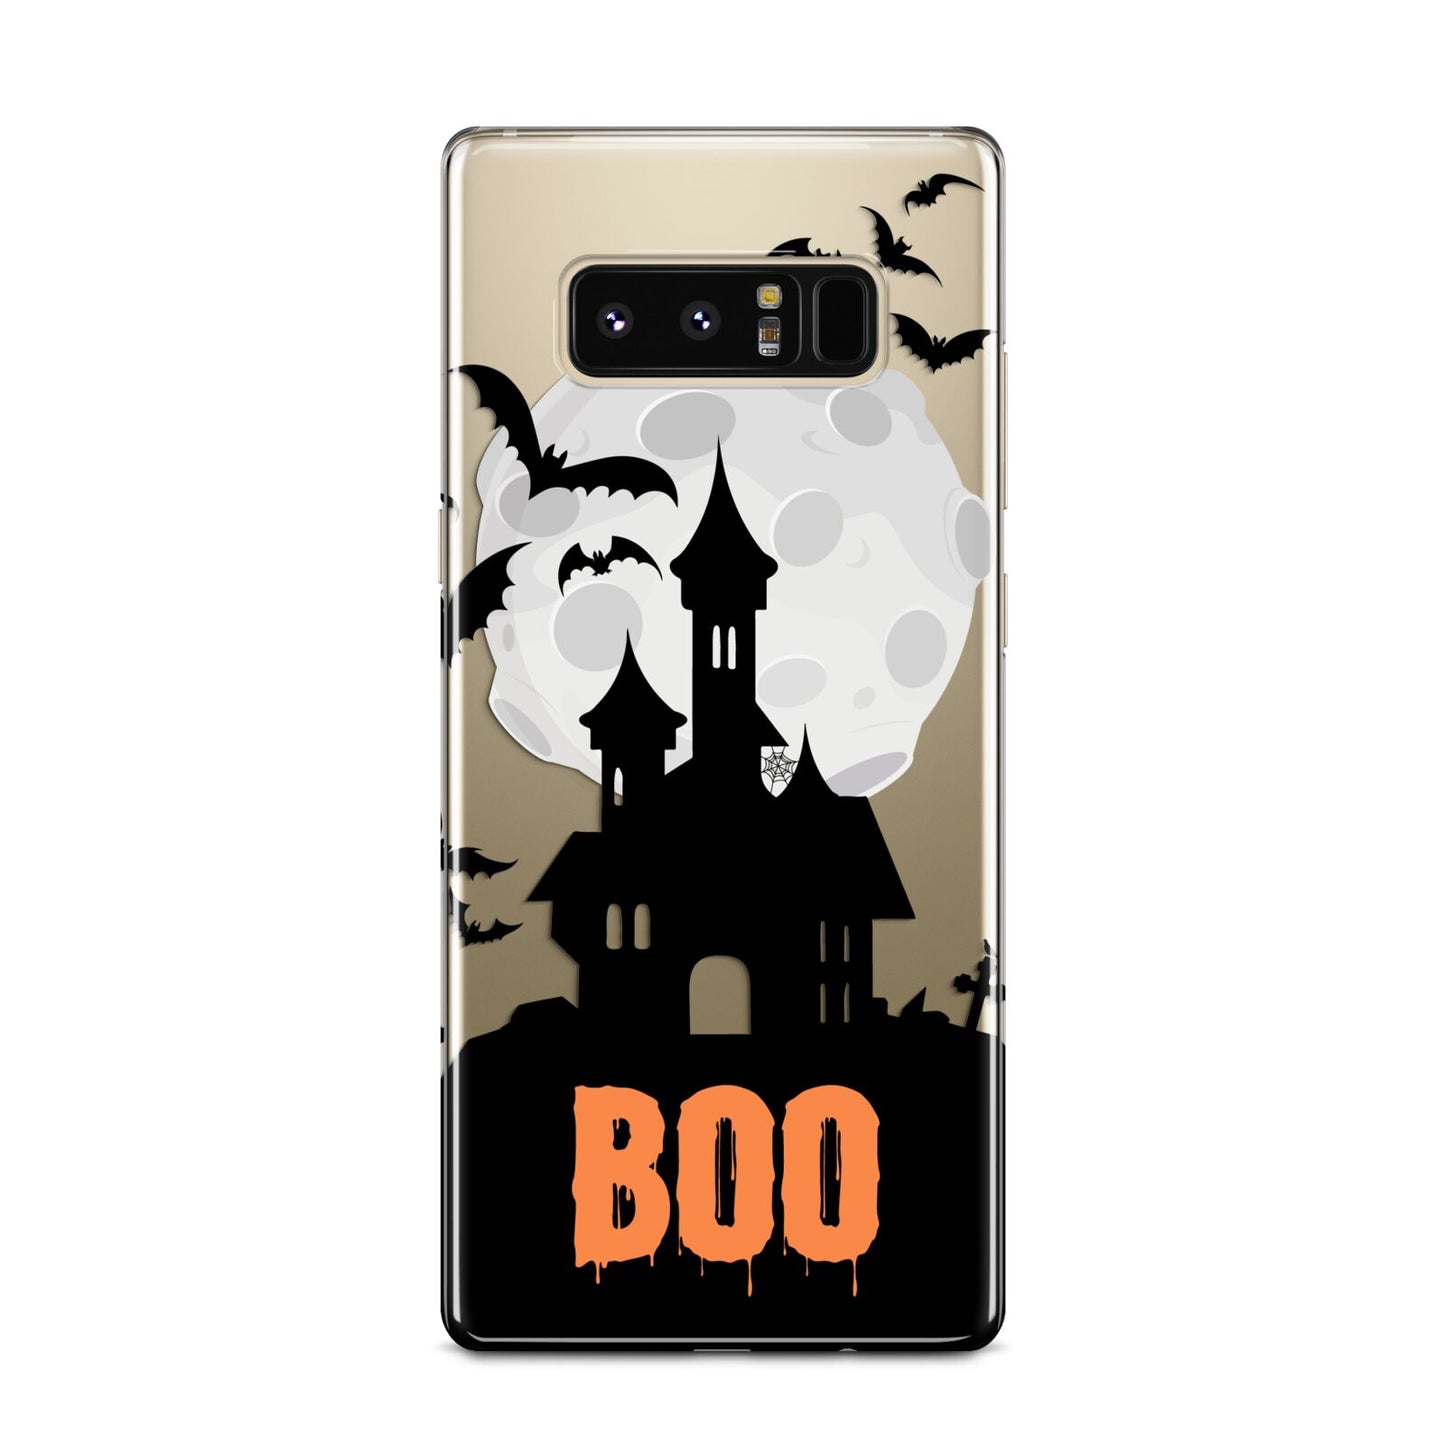 Boo Gothic Black Halloween Samsung Galaxy Note 8 Case